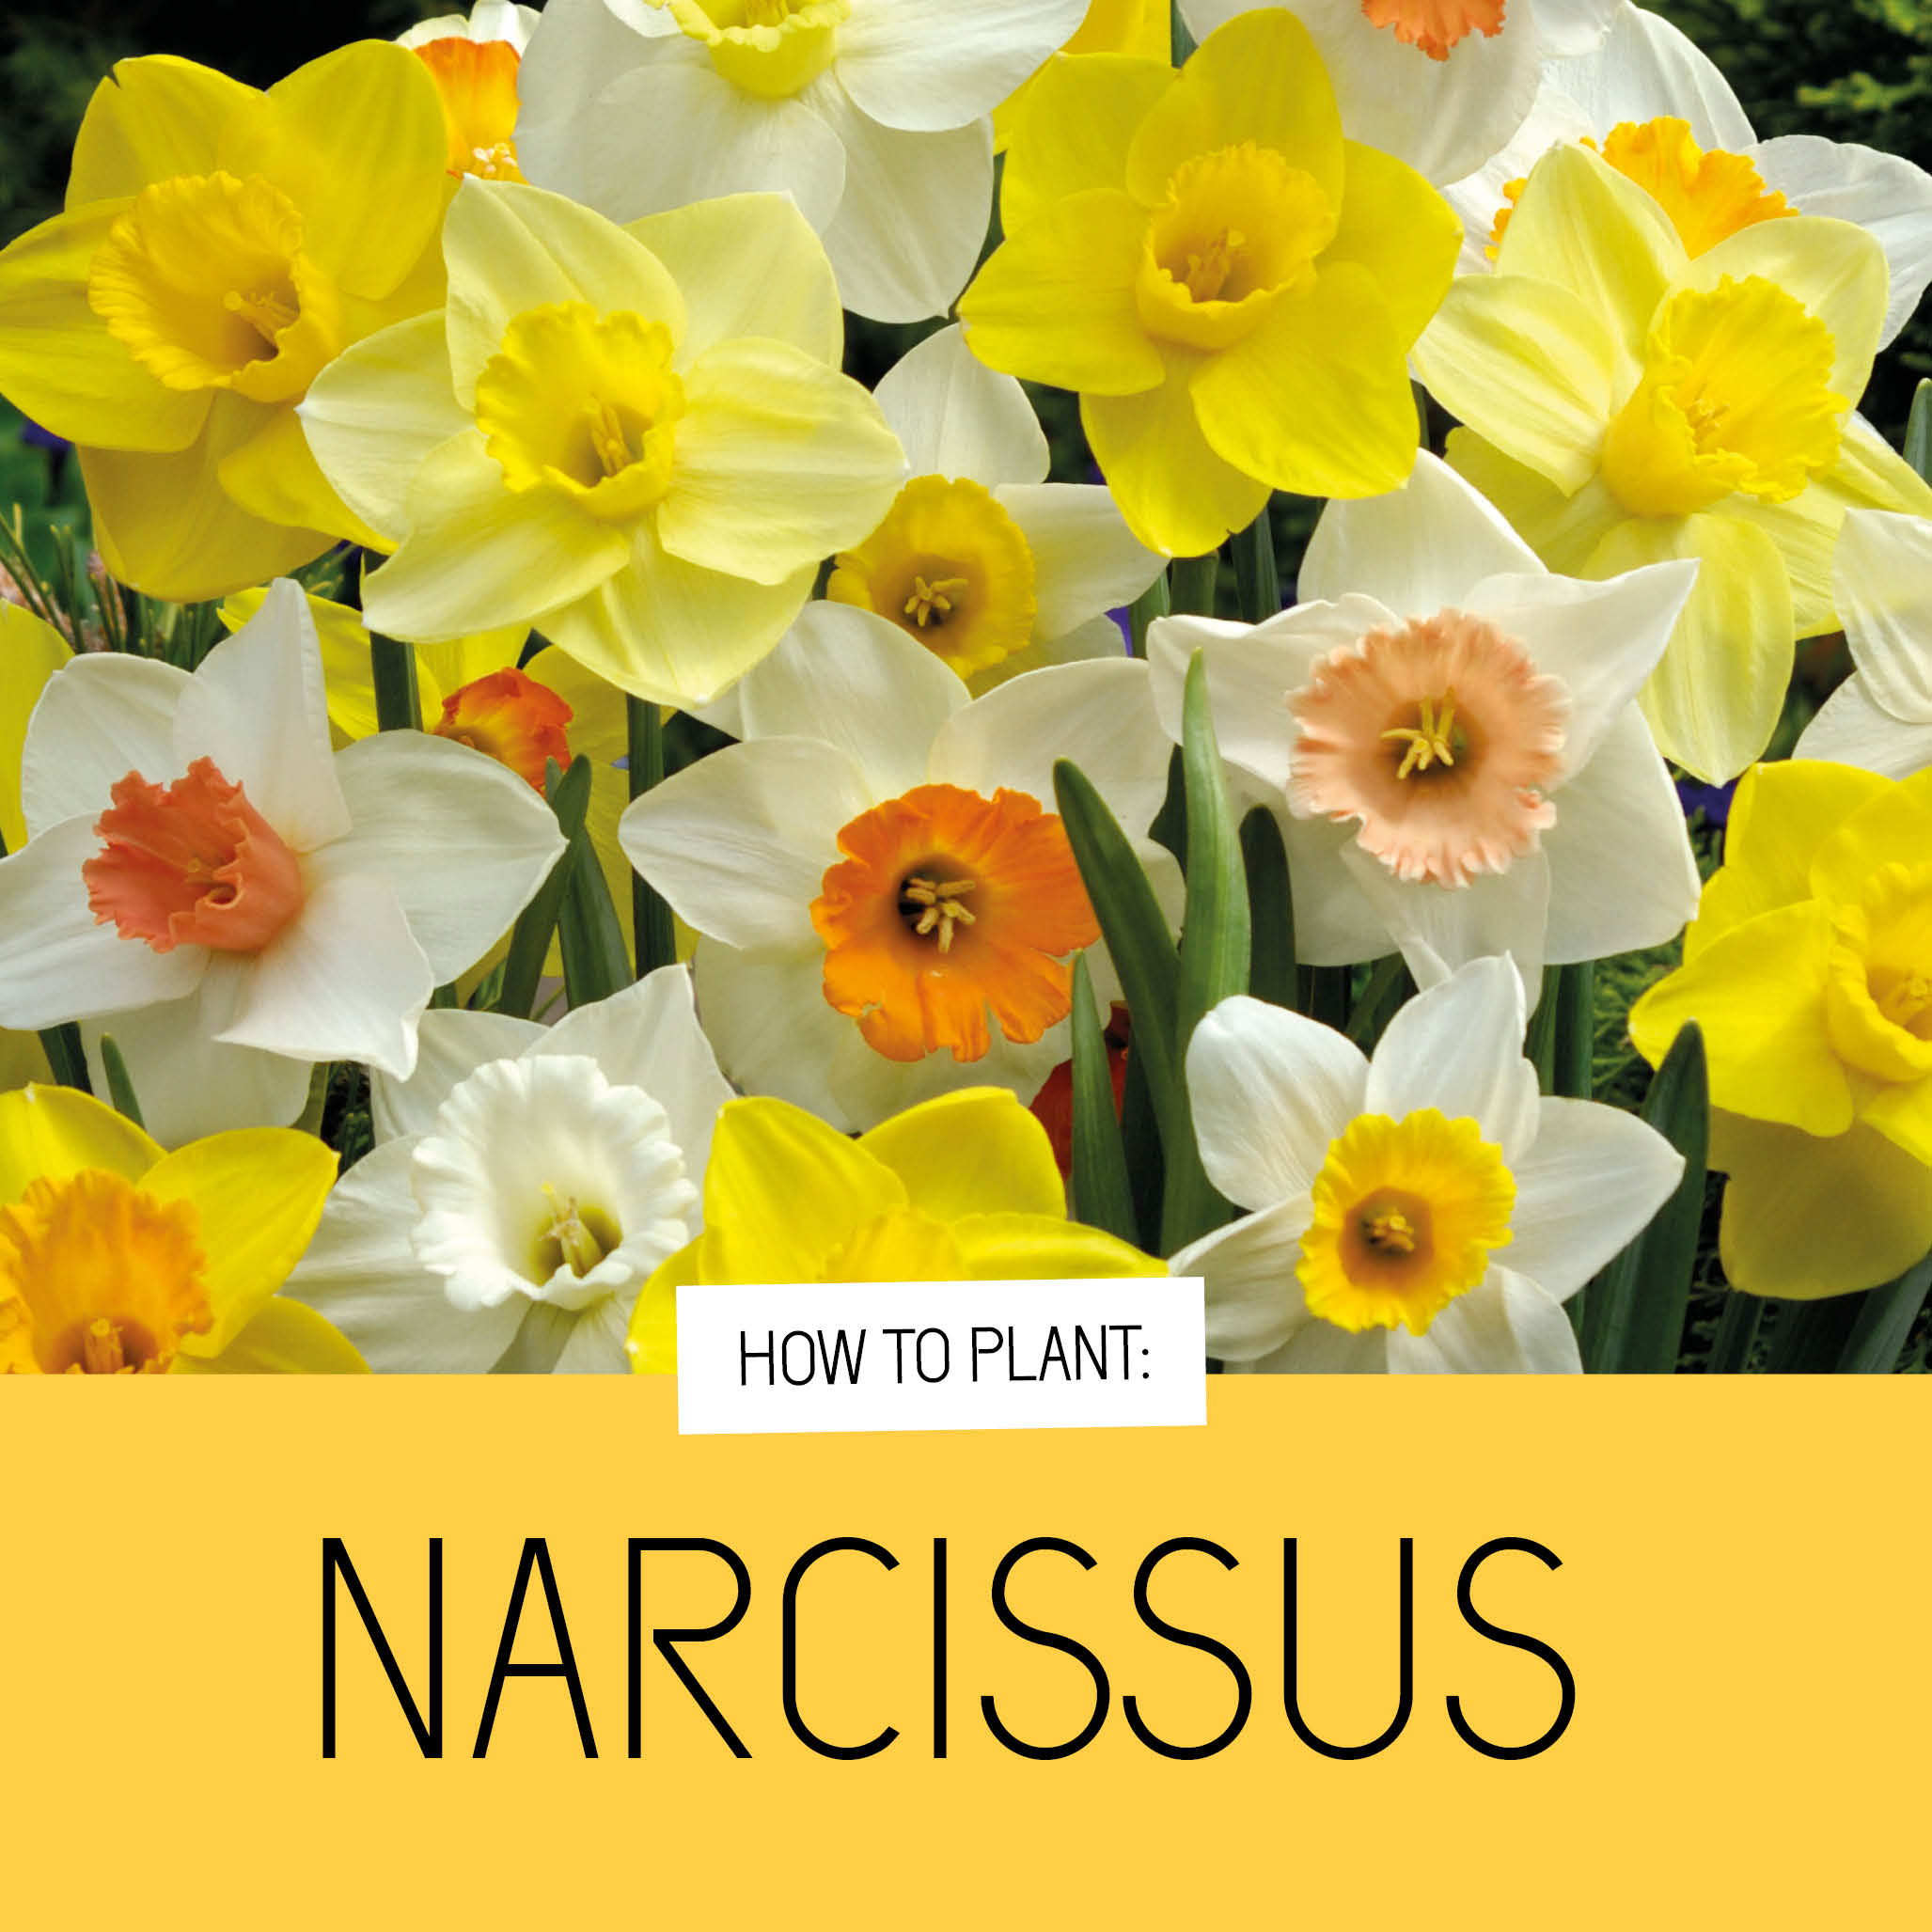 Narcissus bulbs